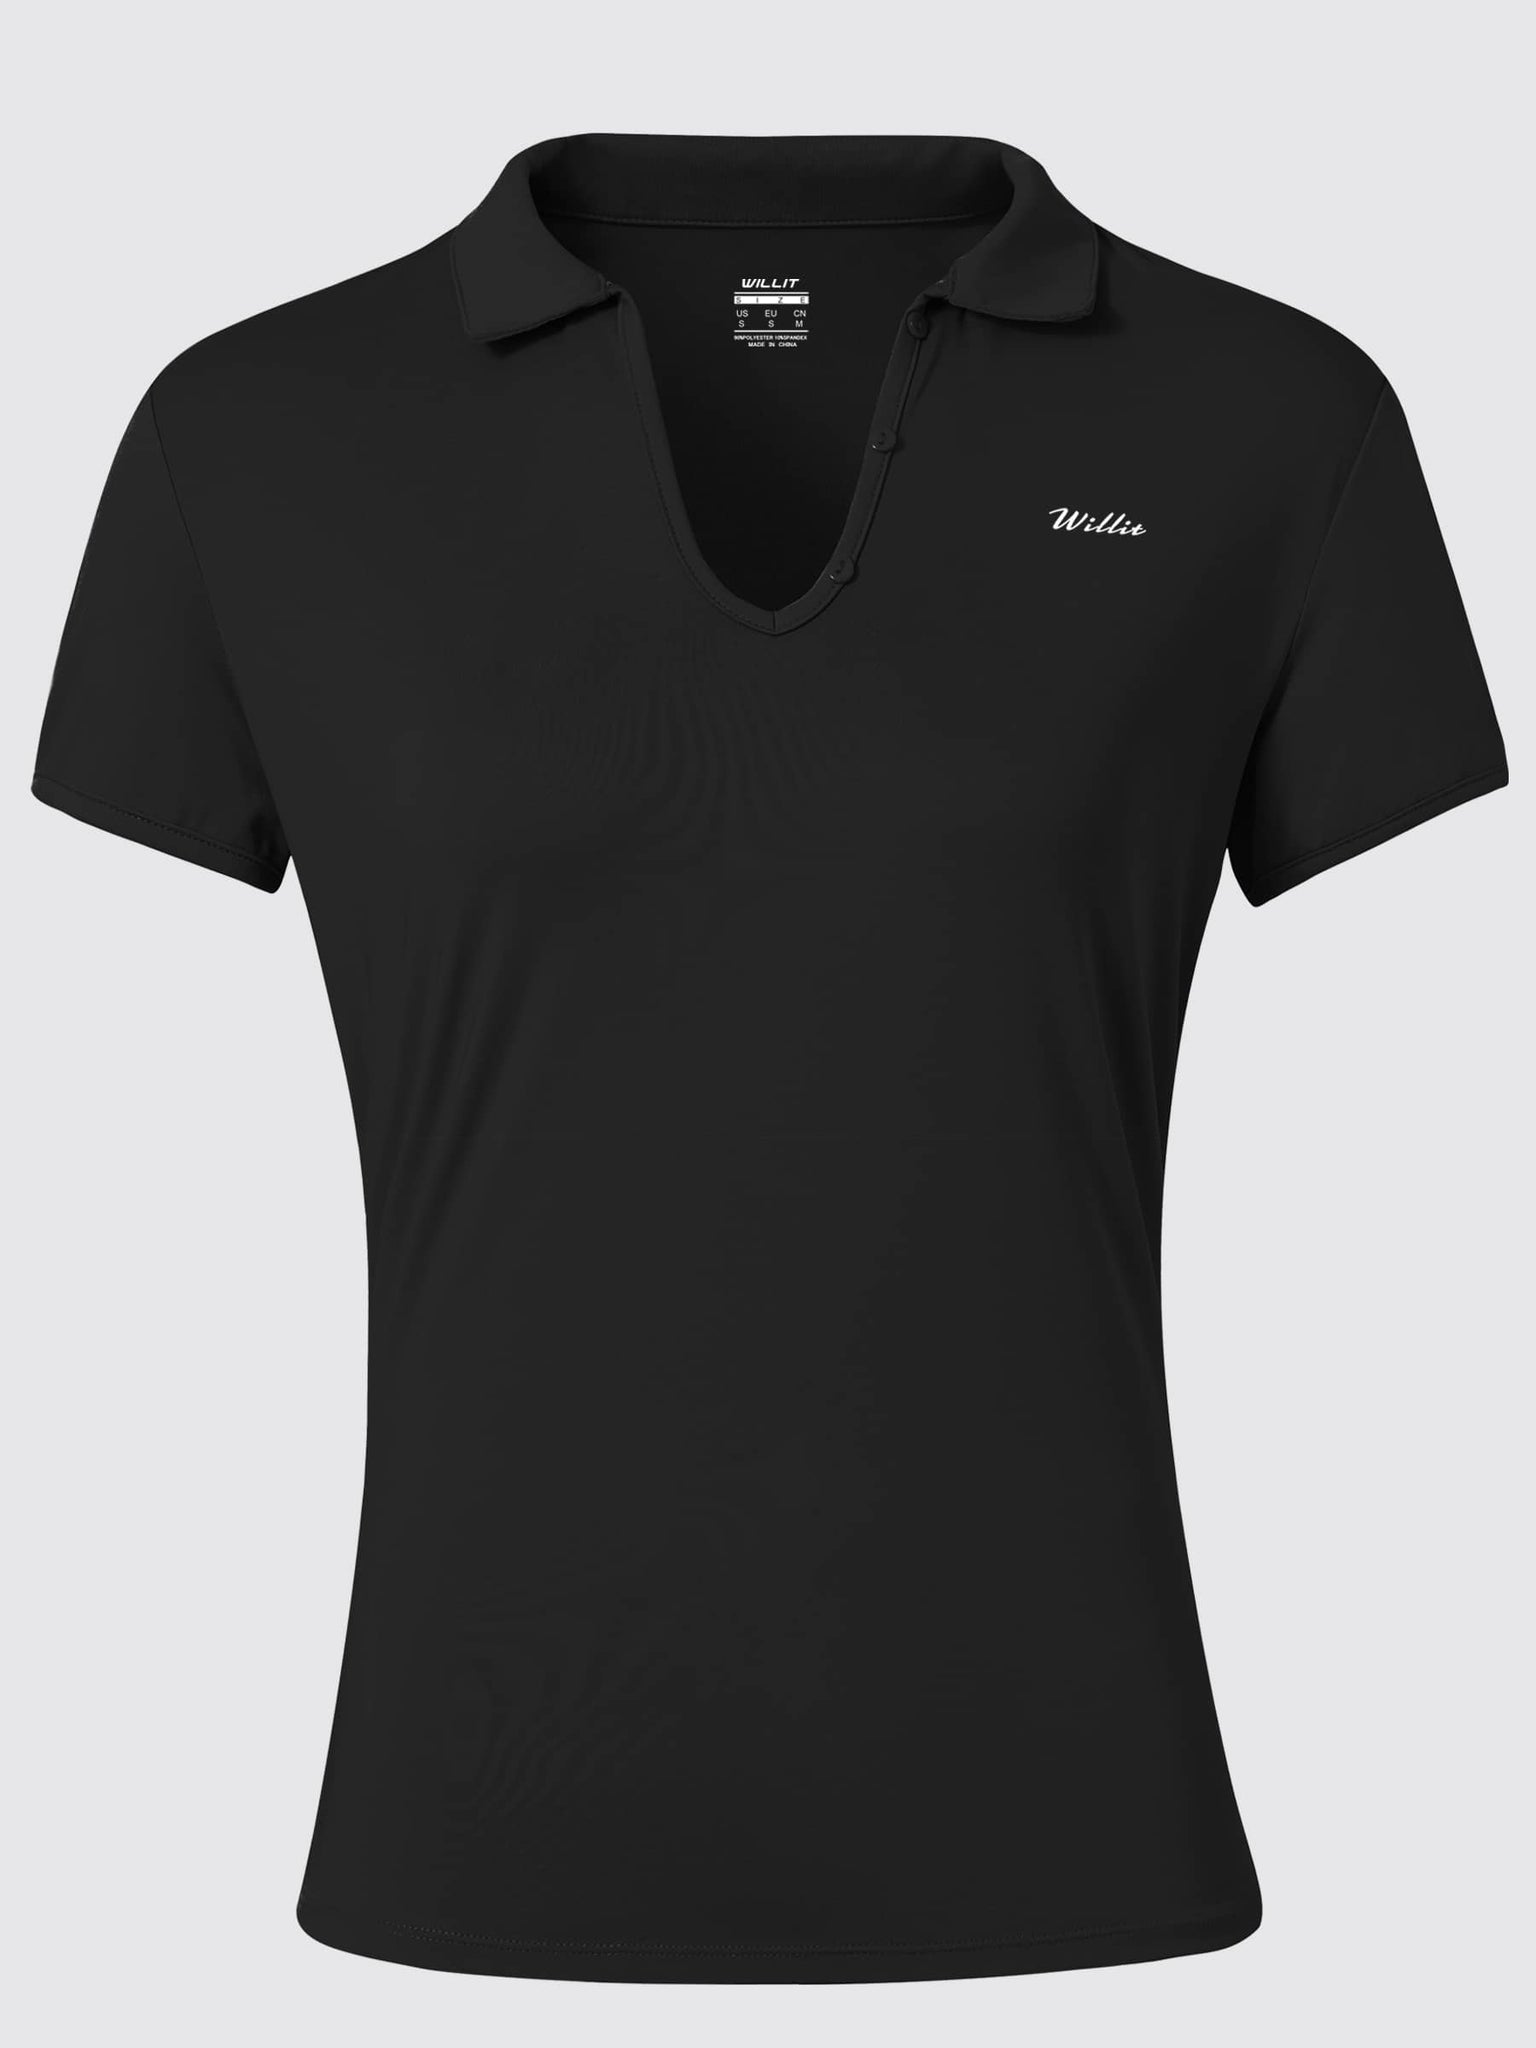 Willit Women's Golf Polo Short Sleeve Shirts_Black1